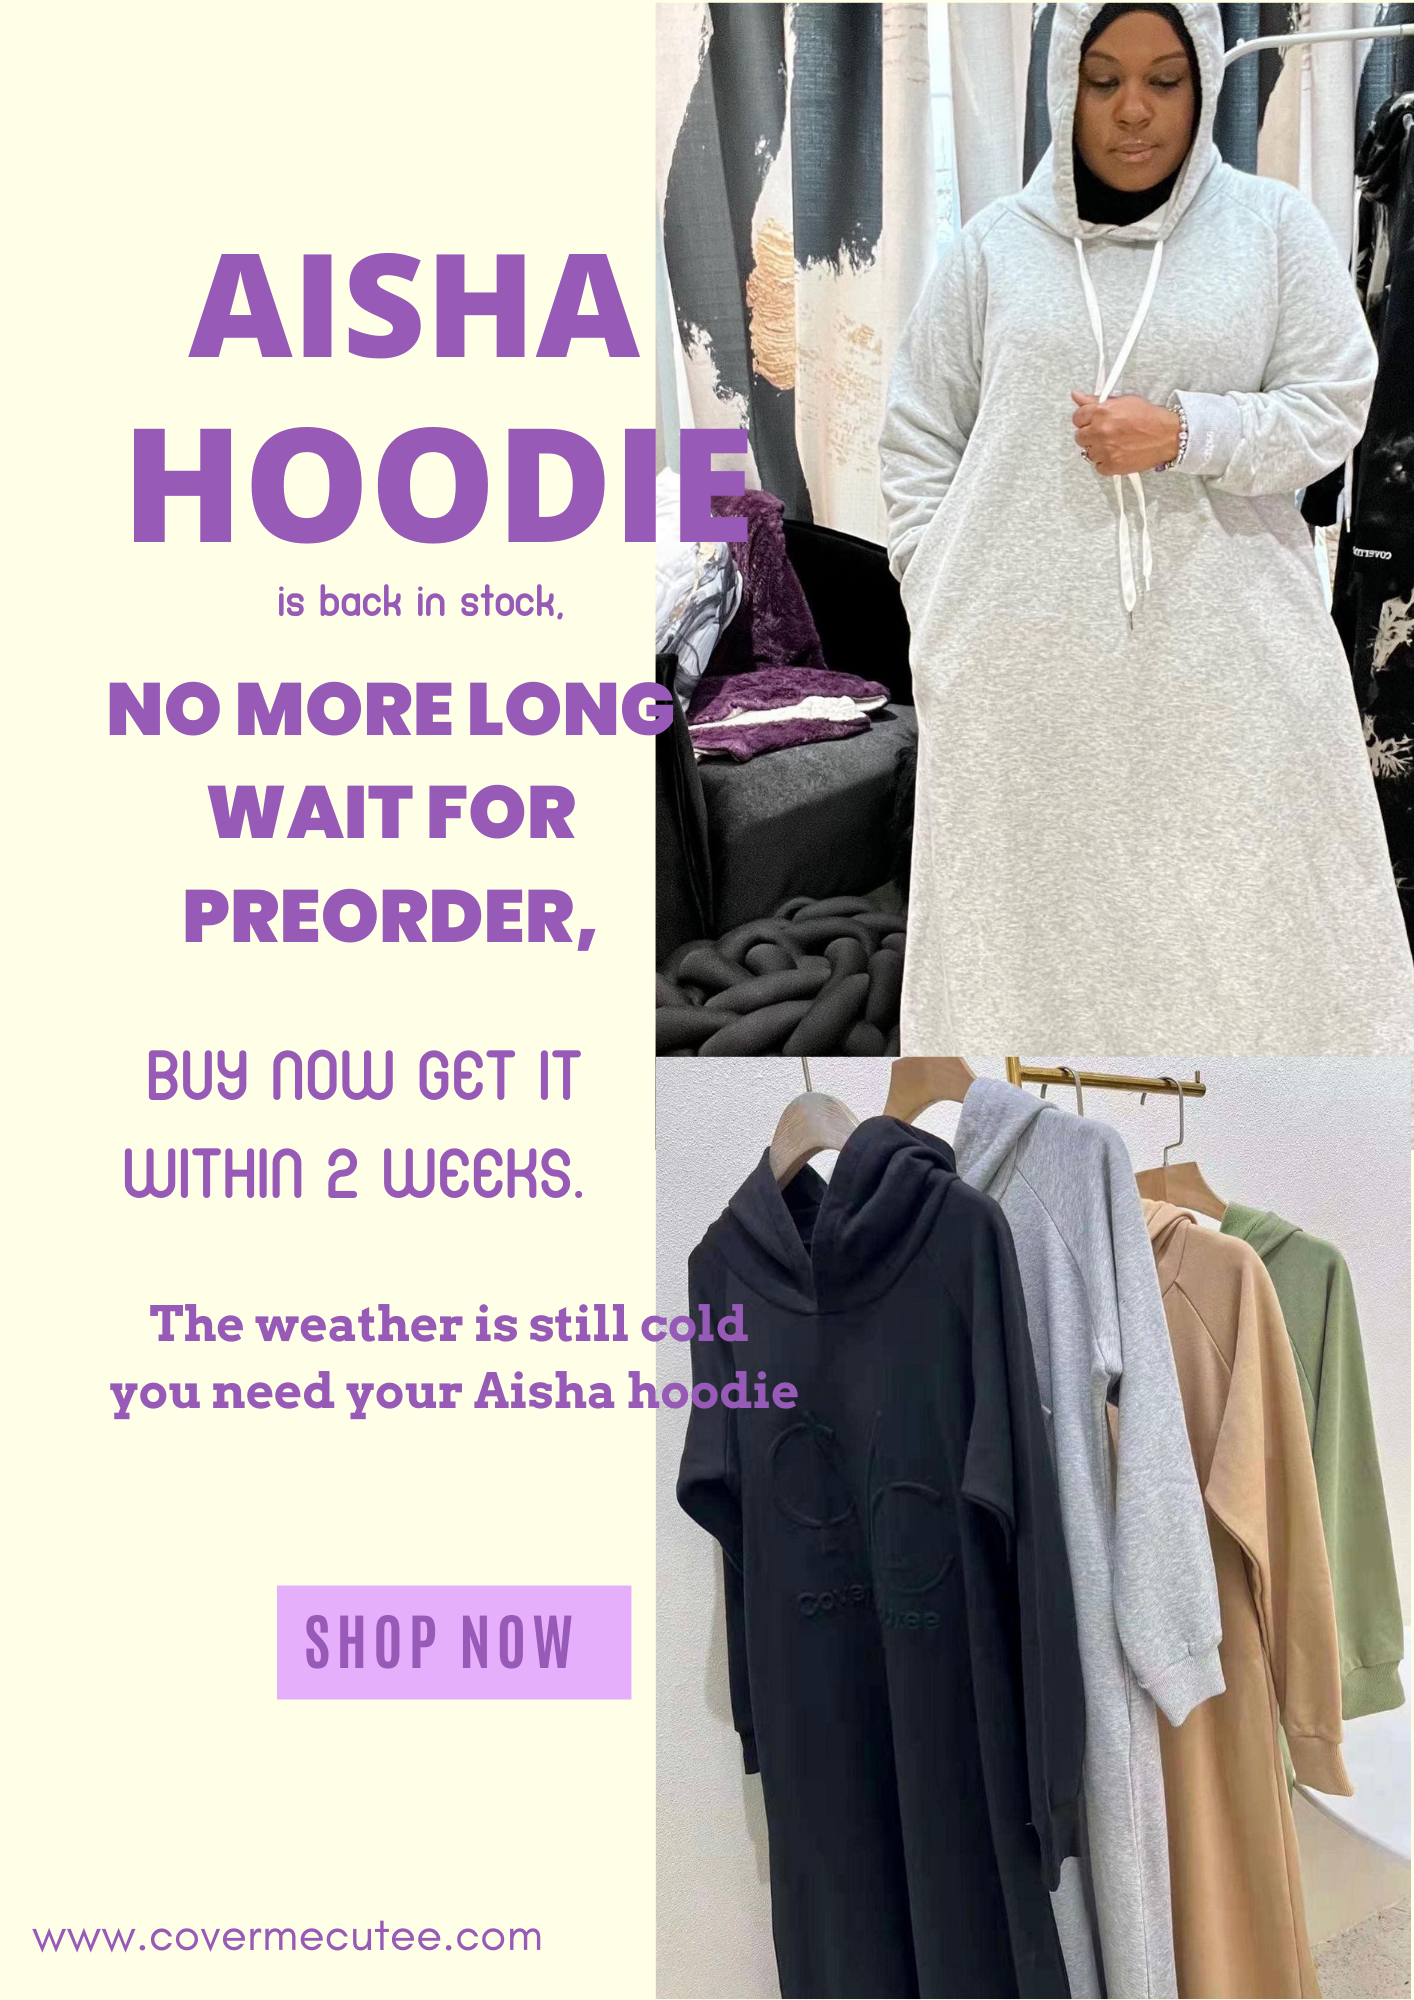 AISHA HOODIES IS BACK